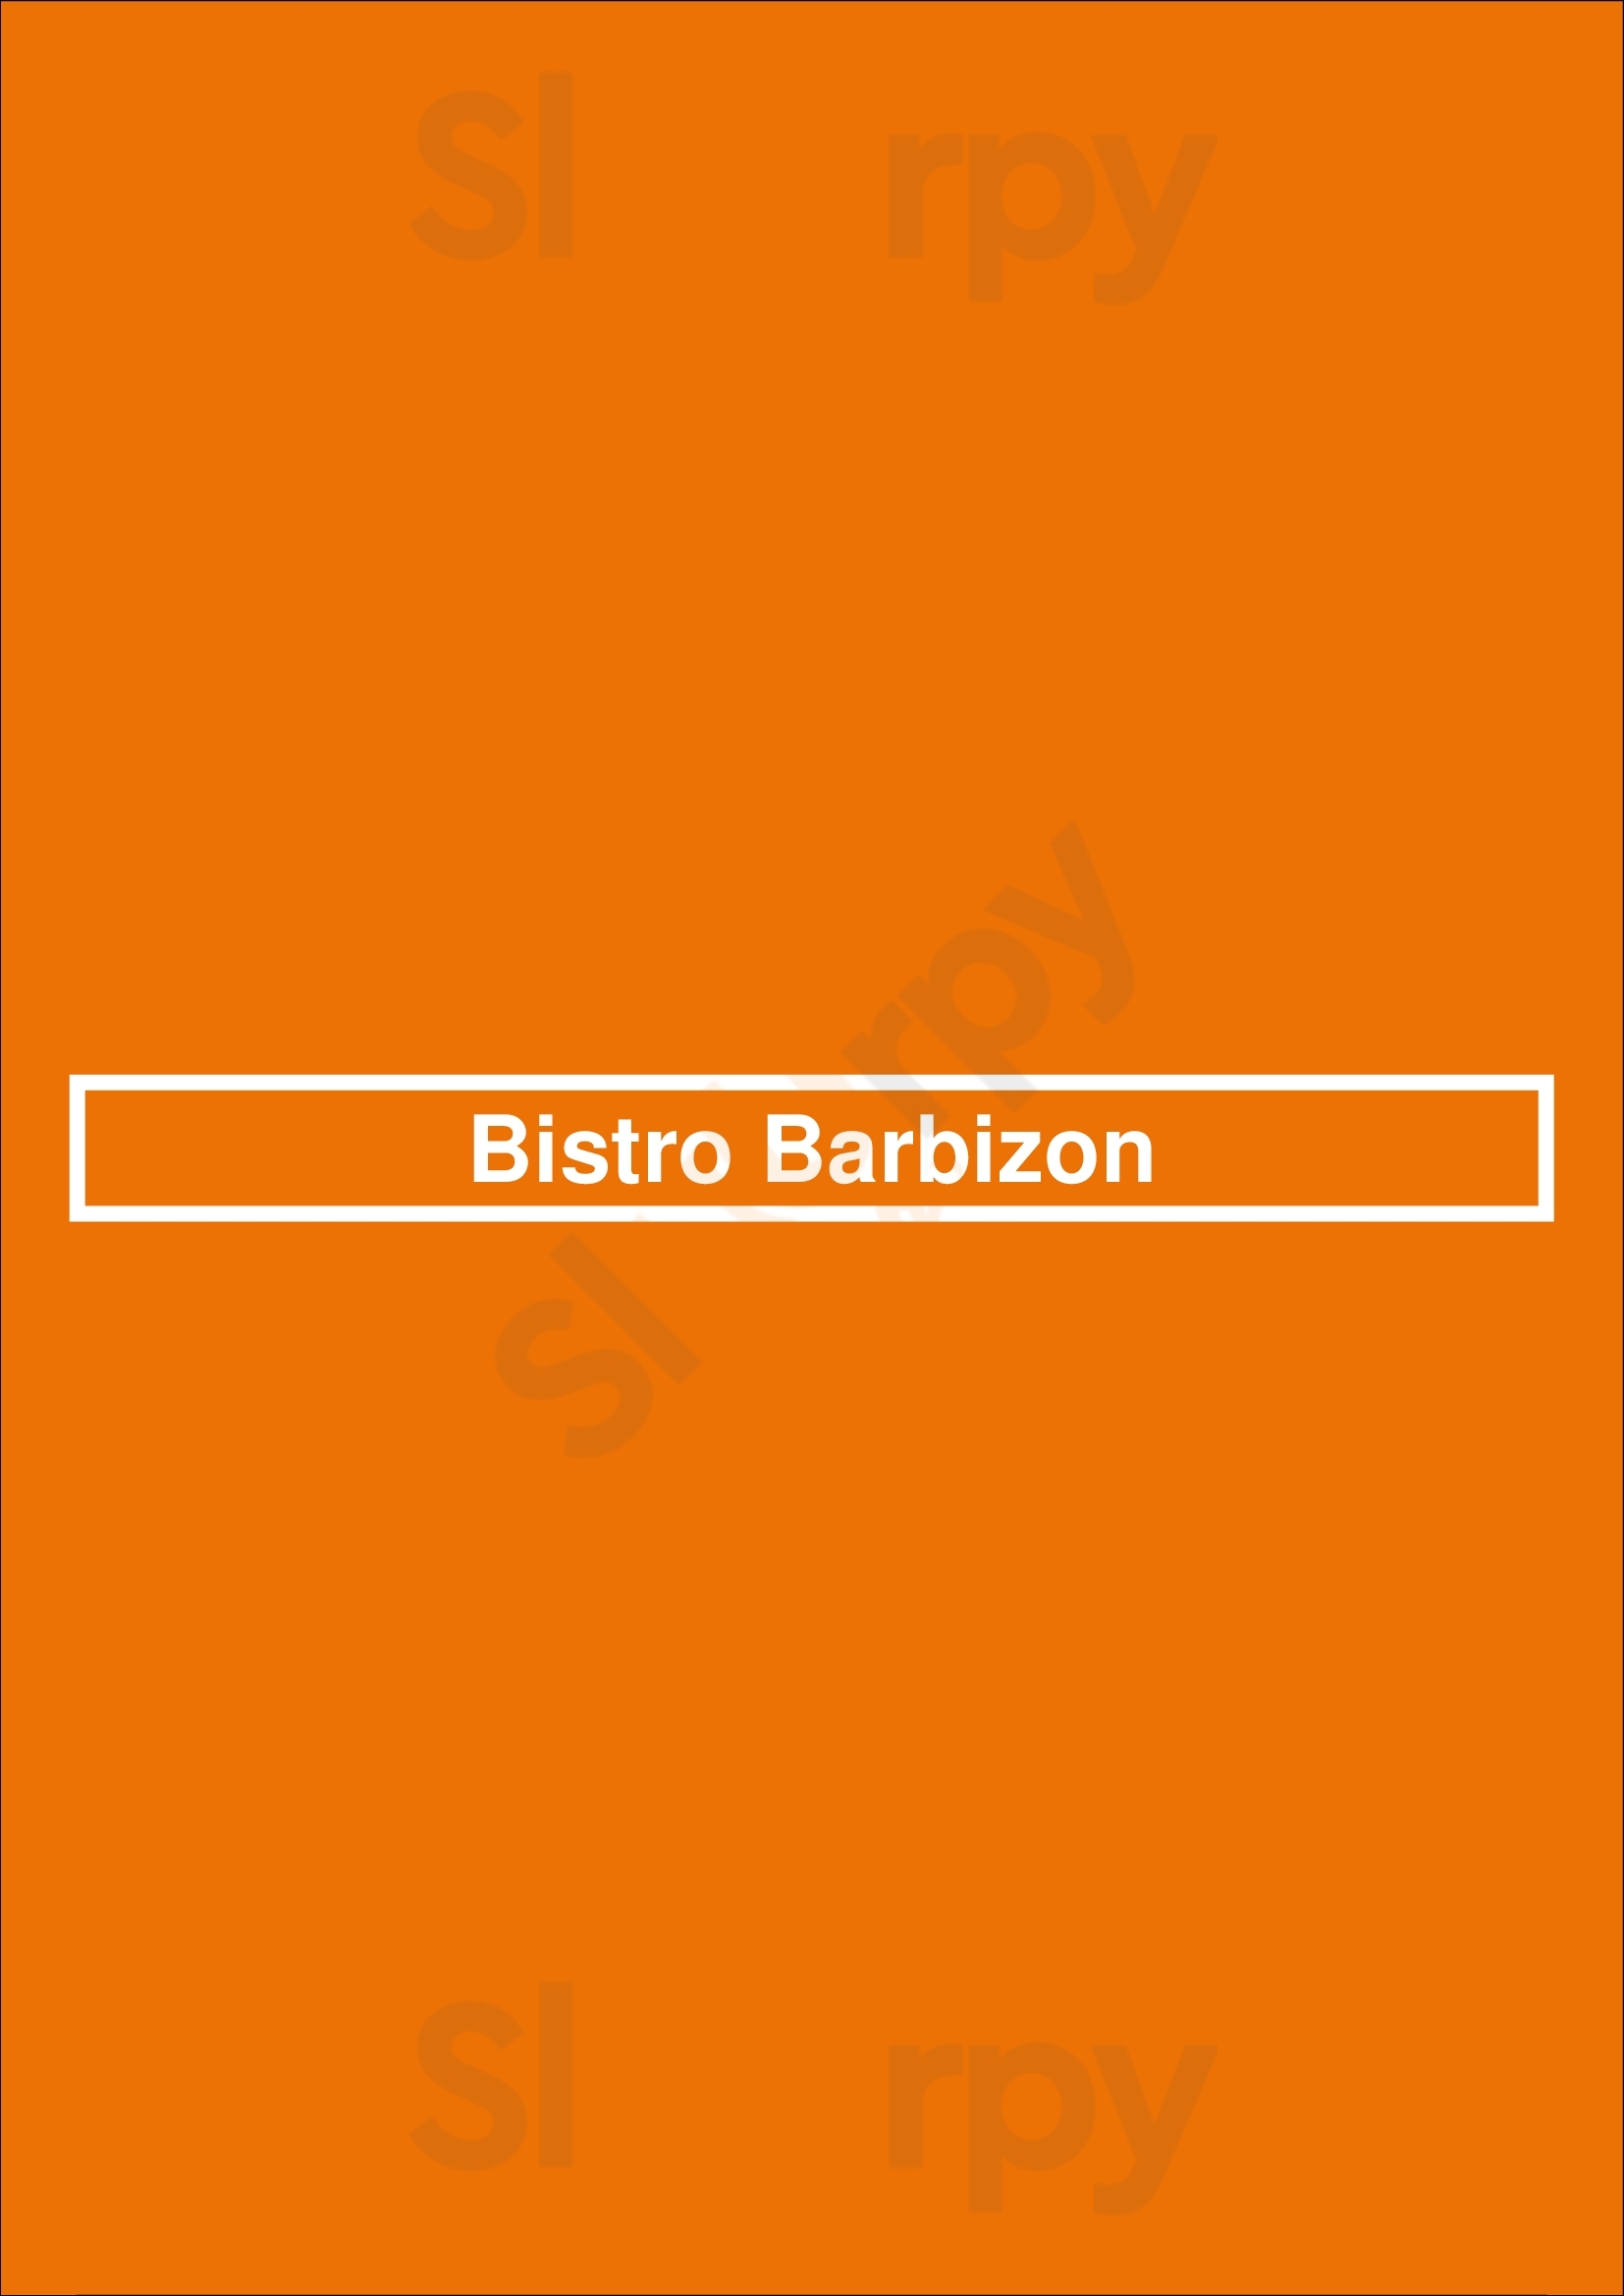 Bistro Barbizon Oosterbeek Menu - 1